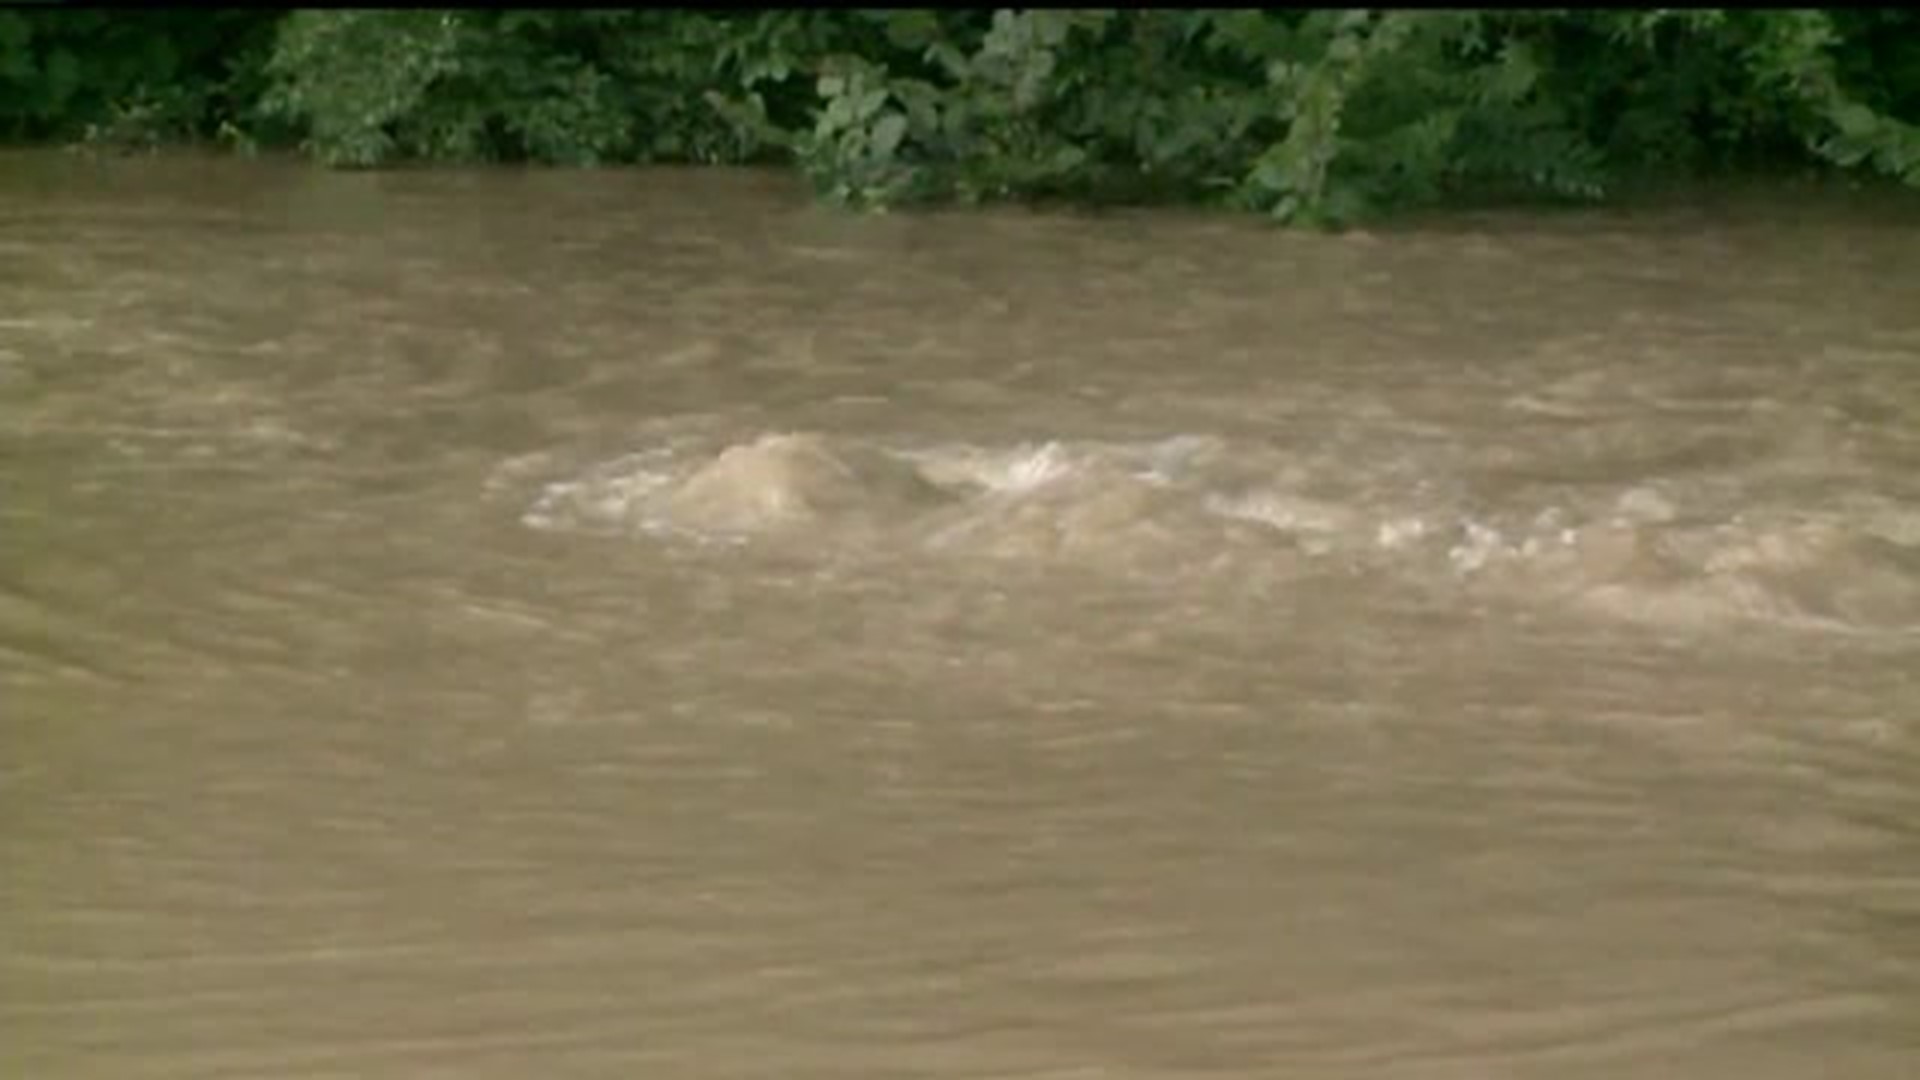 Water Woes Receding in Danville